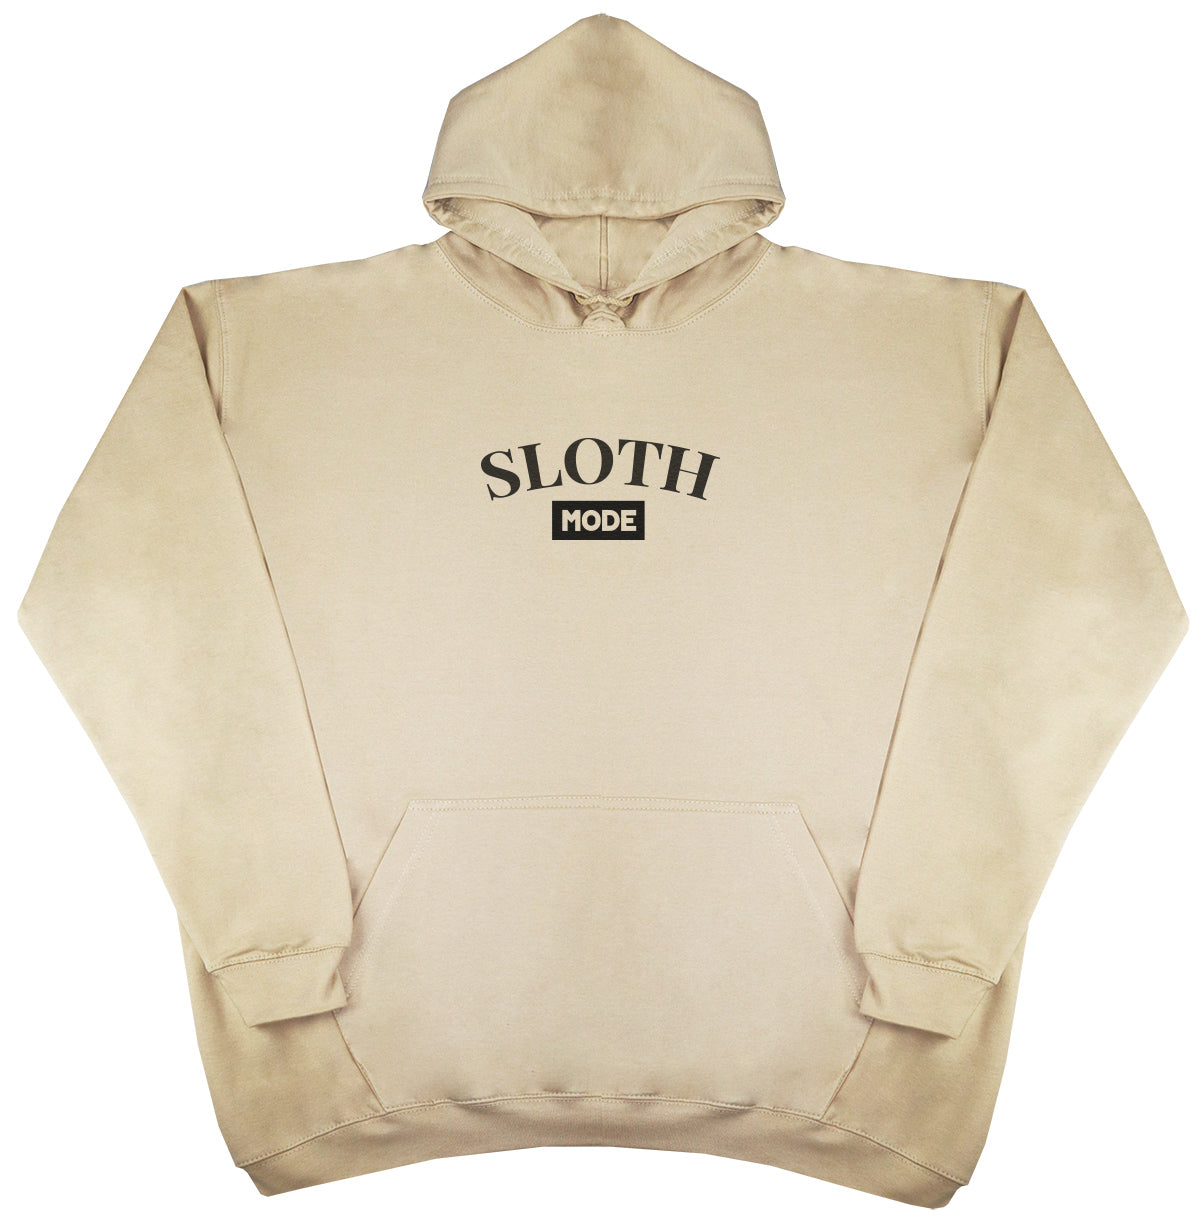 Sloth Mode - Huge Oversized Comfy Original Hoody